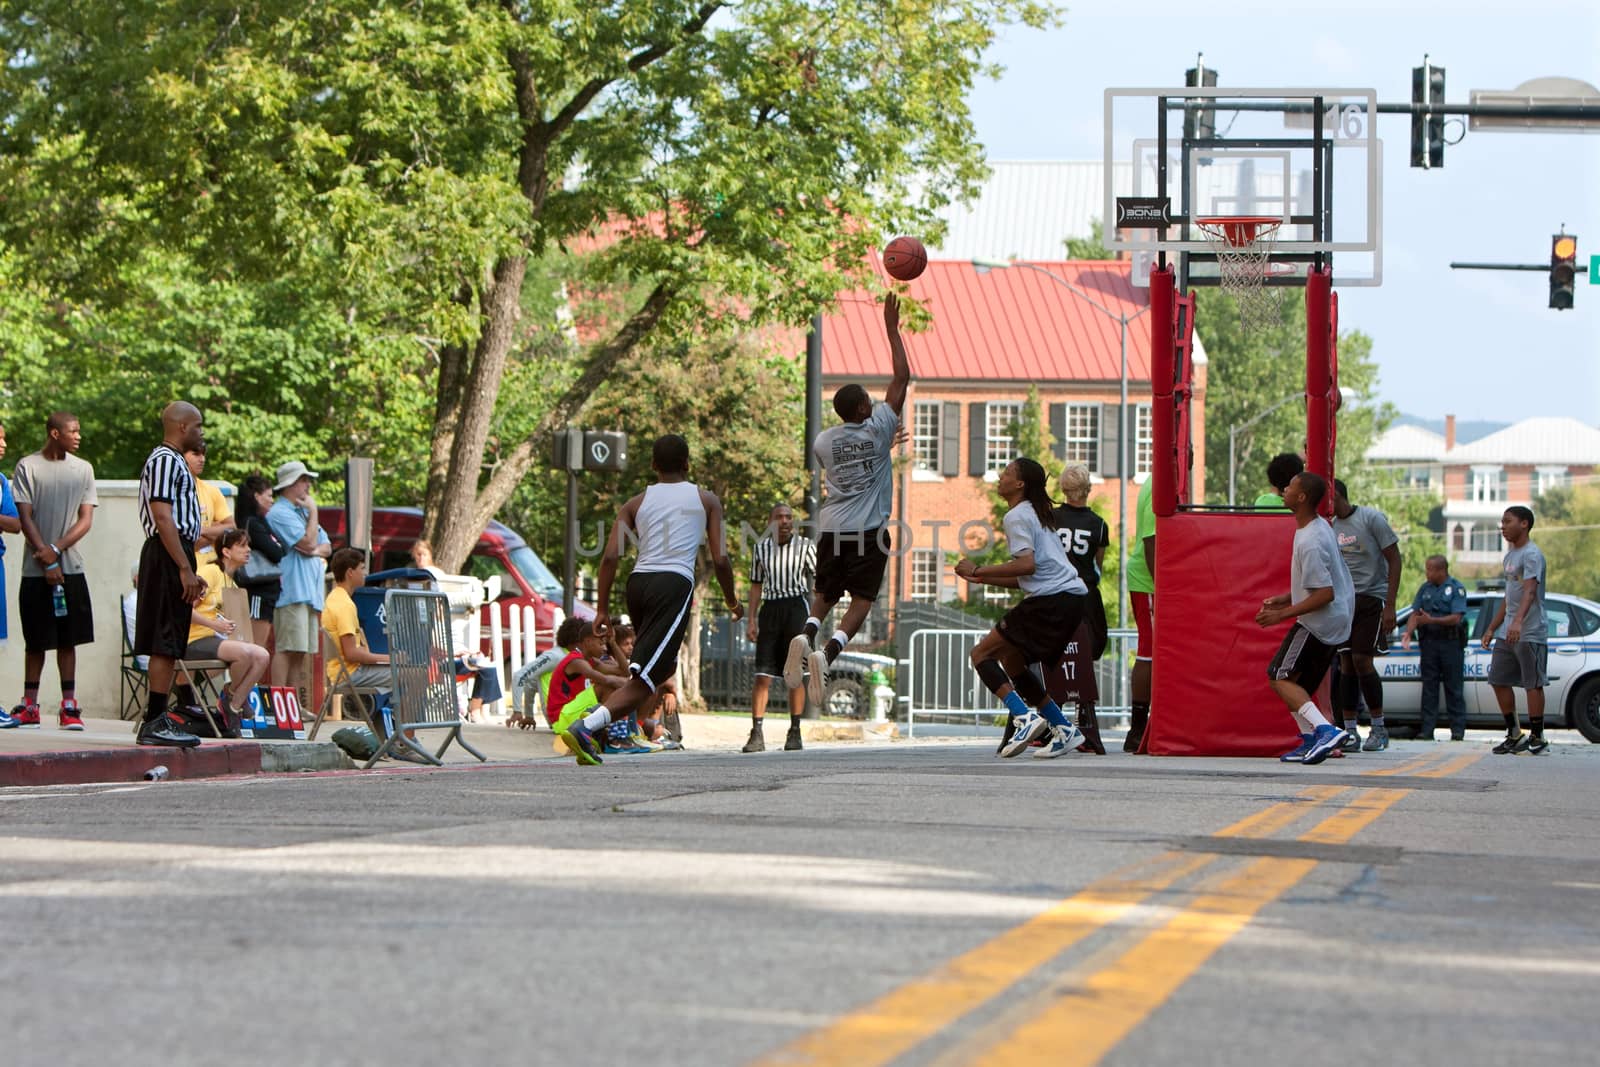 Teenage Boys Compete In Asphalt Basketball Tournament On City Street by BluIz60